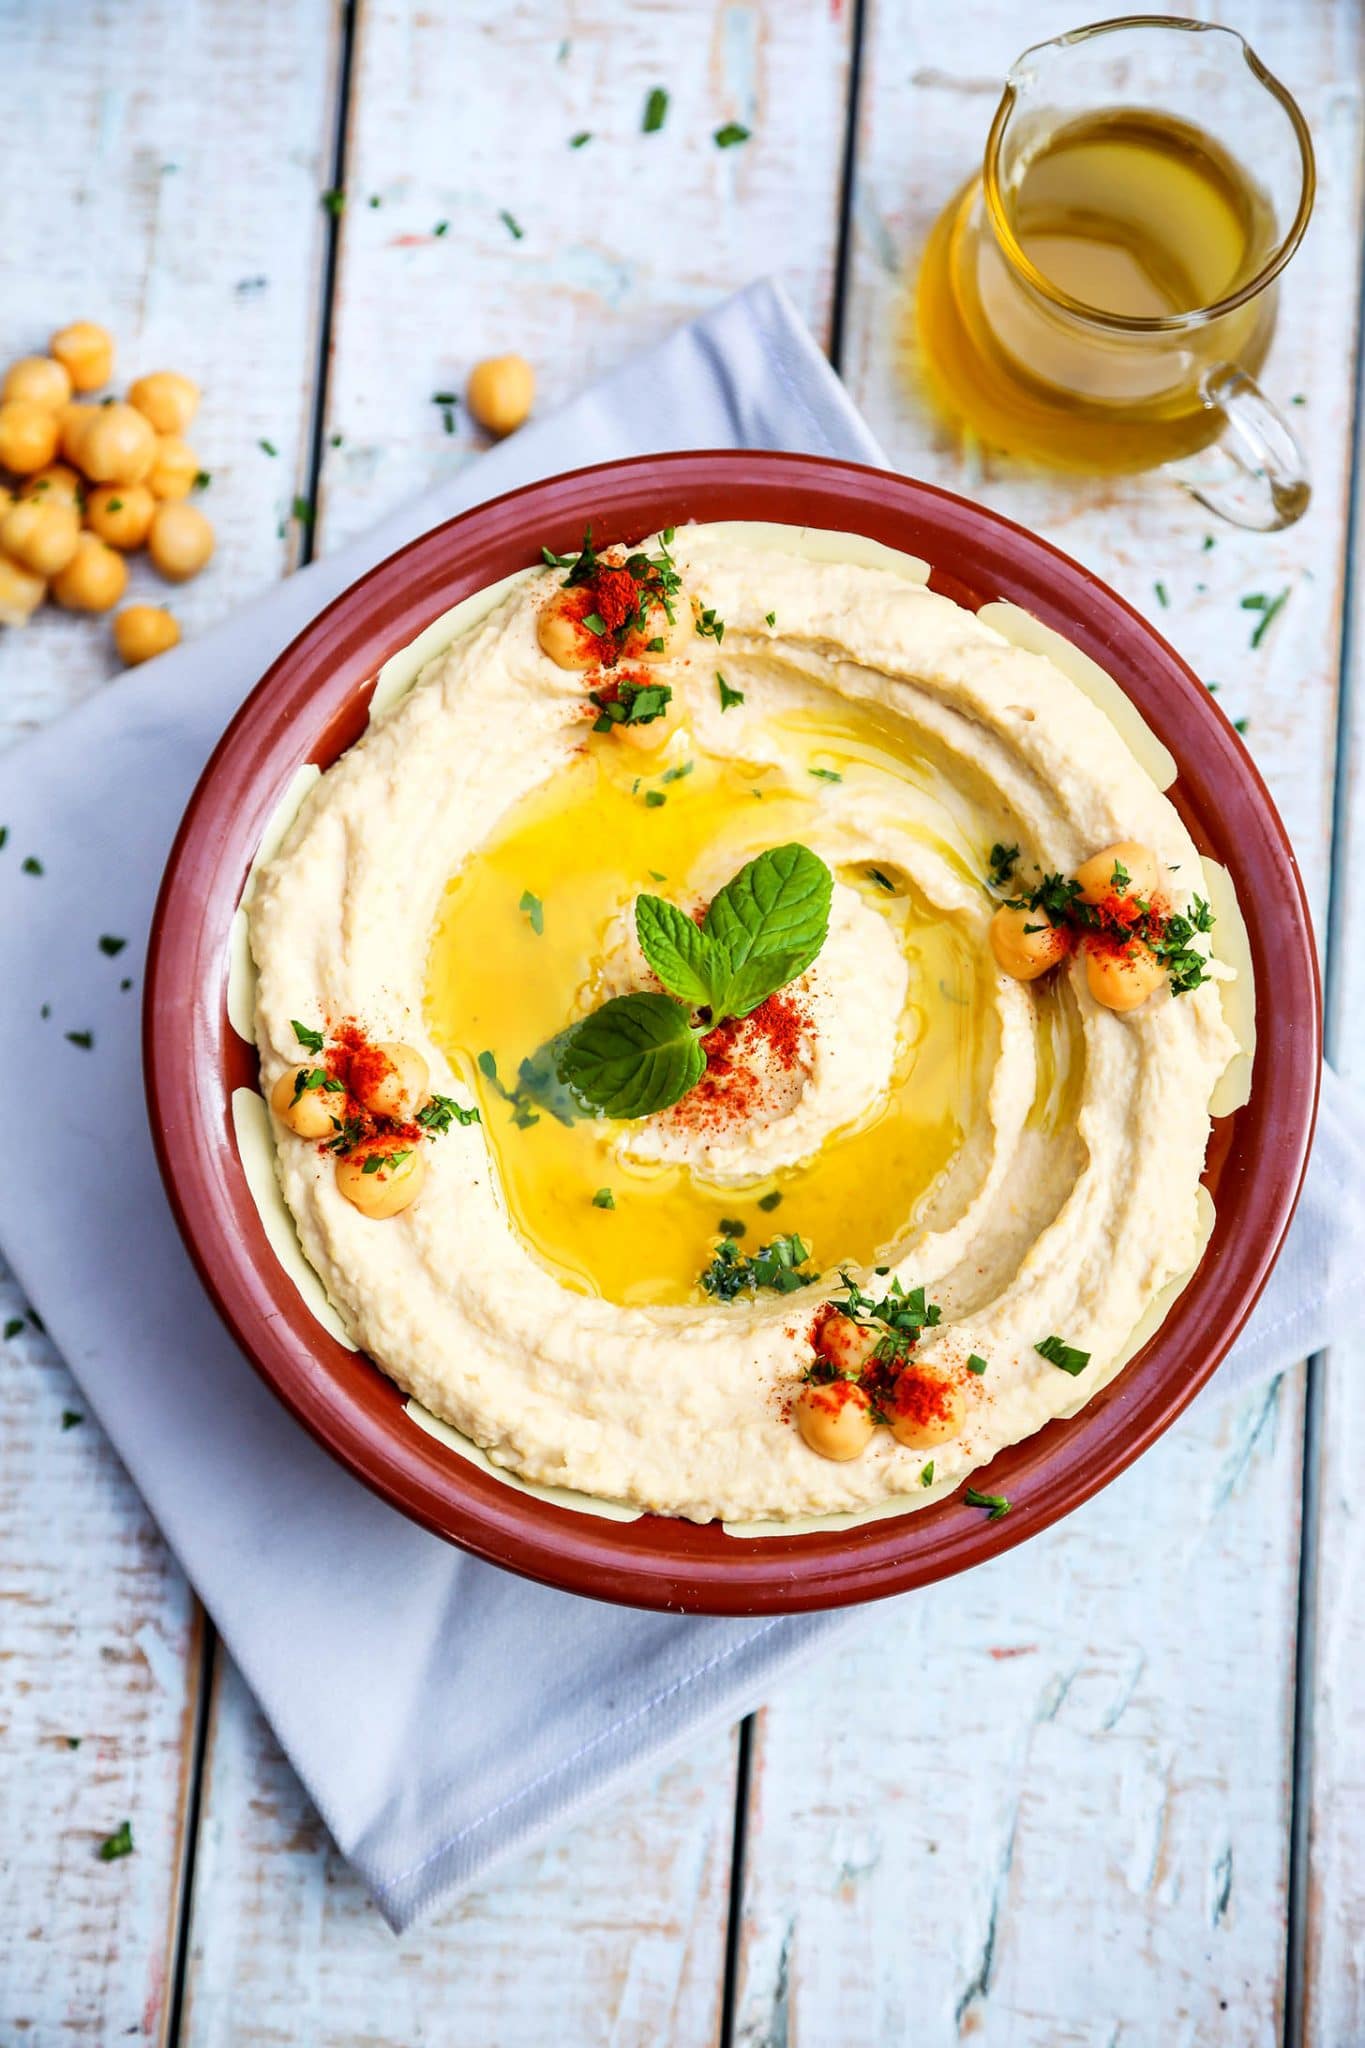 Hummus Recipe (The Traditional Tasty Way) - Chef Tariq